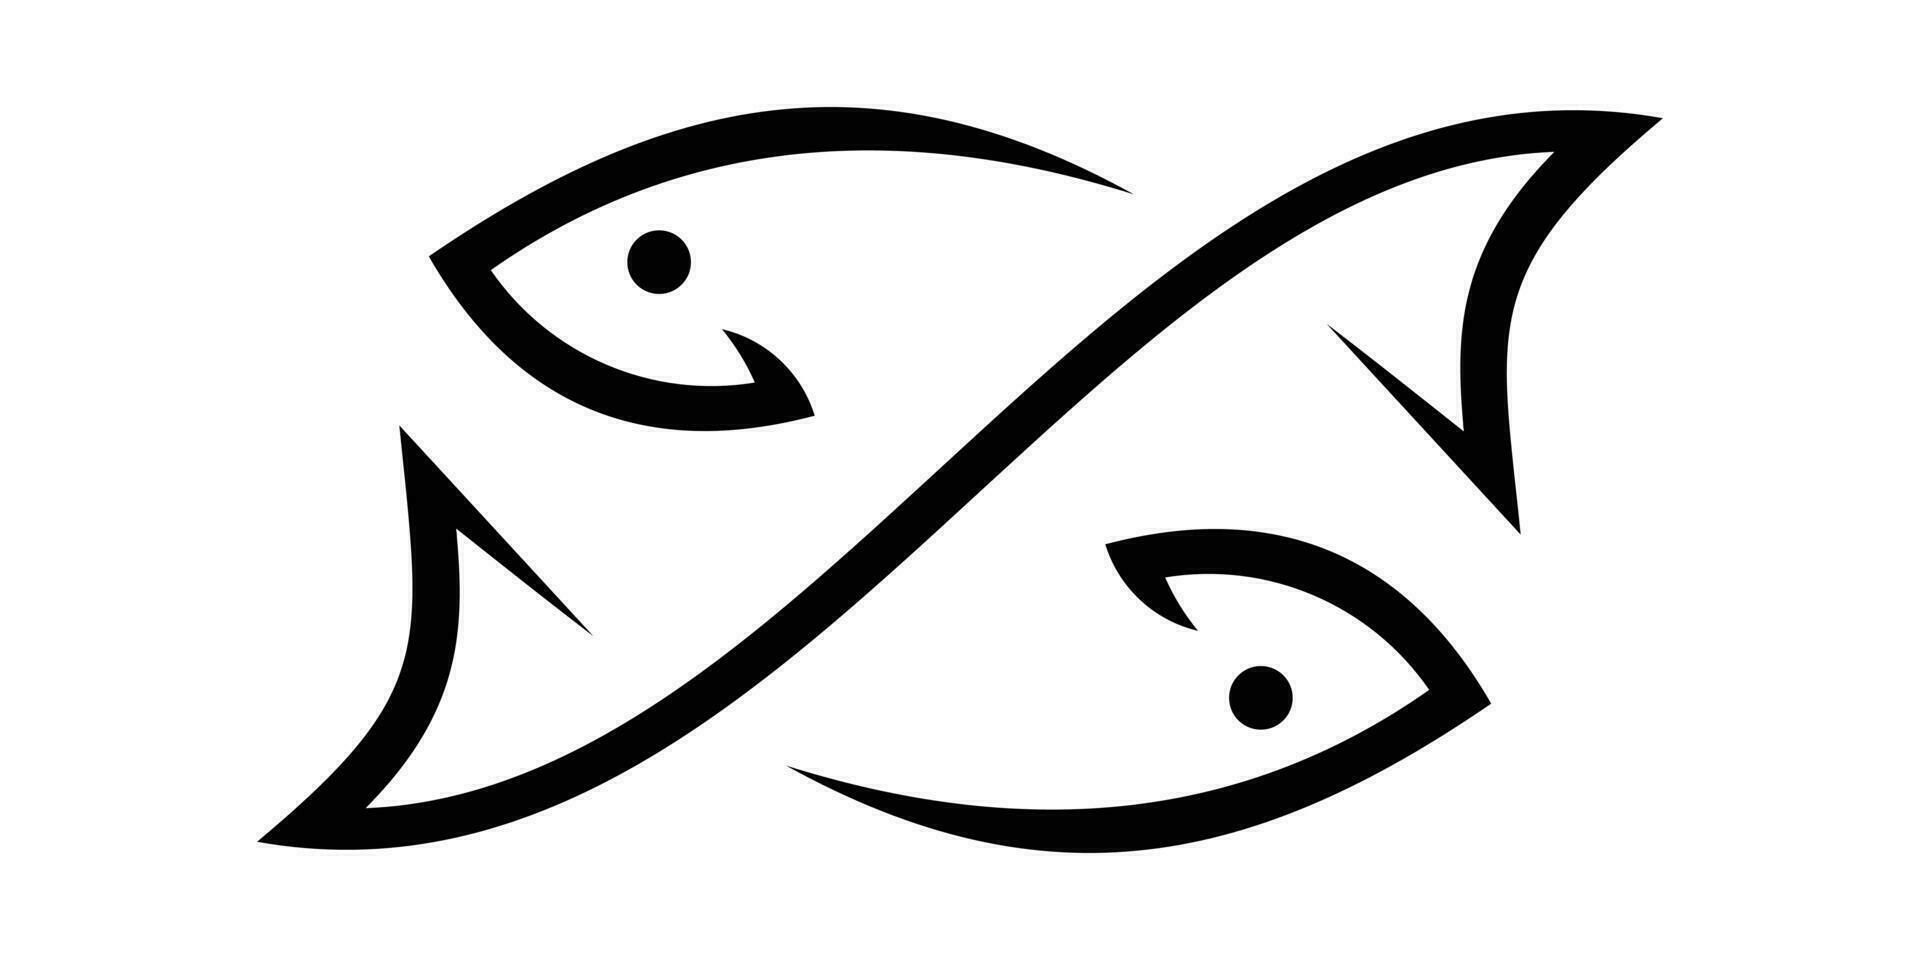 fish and infinite,two fish logo design vector icon illustration